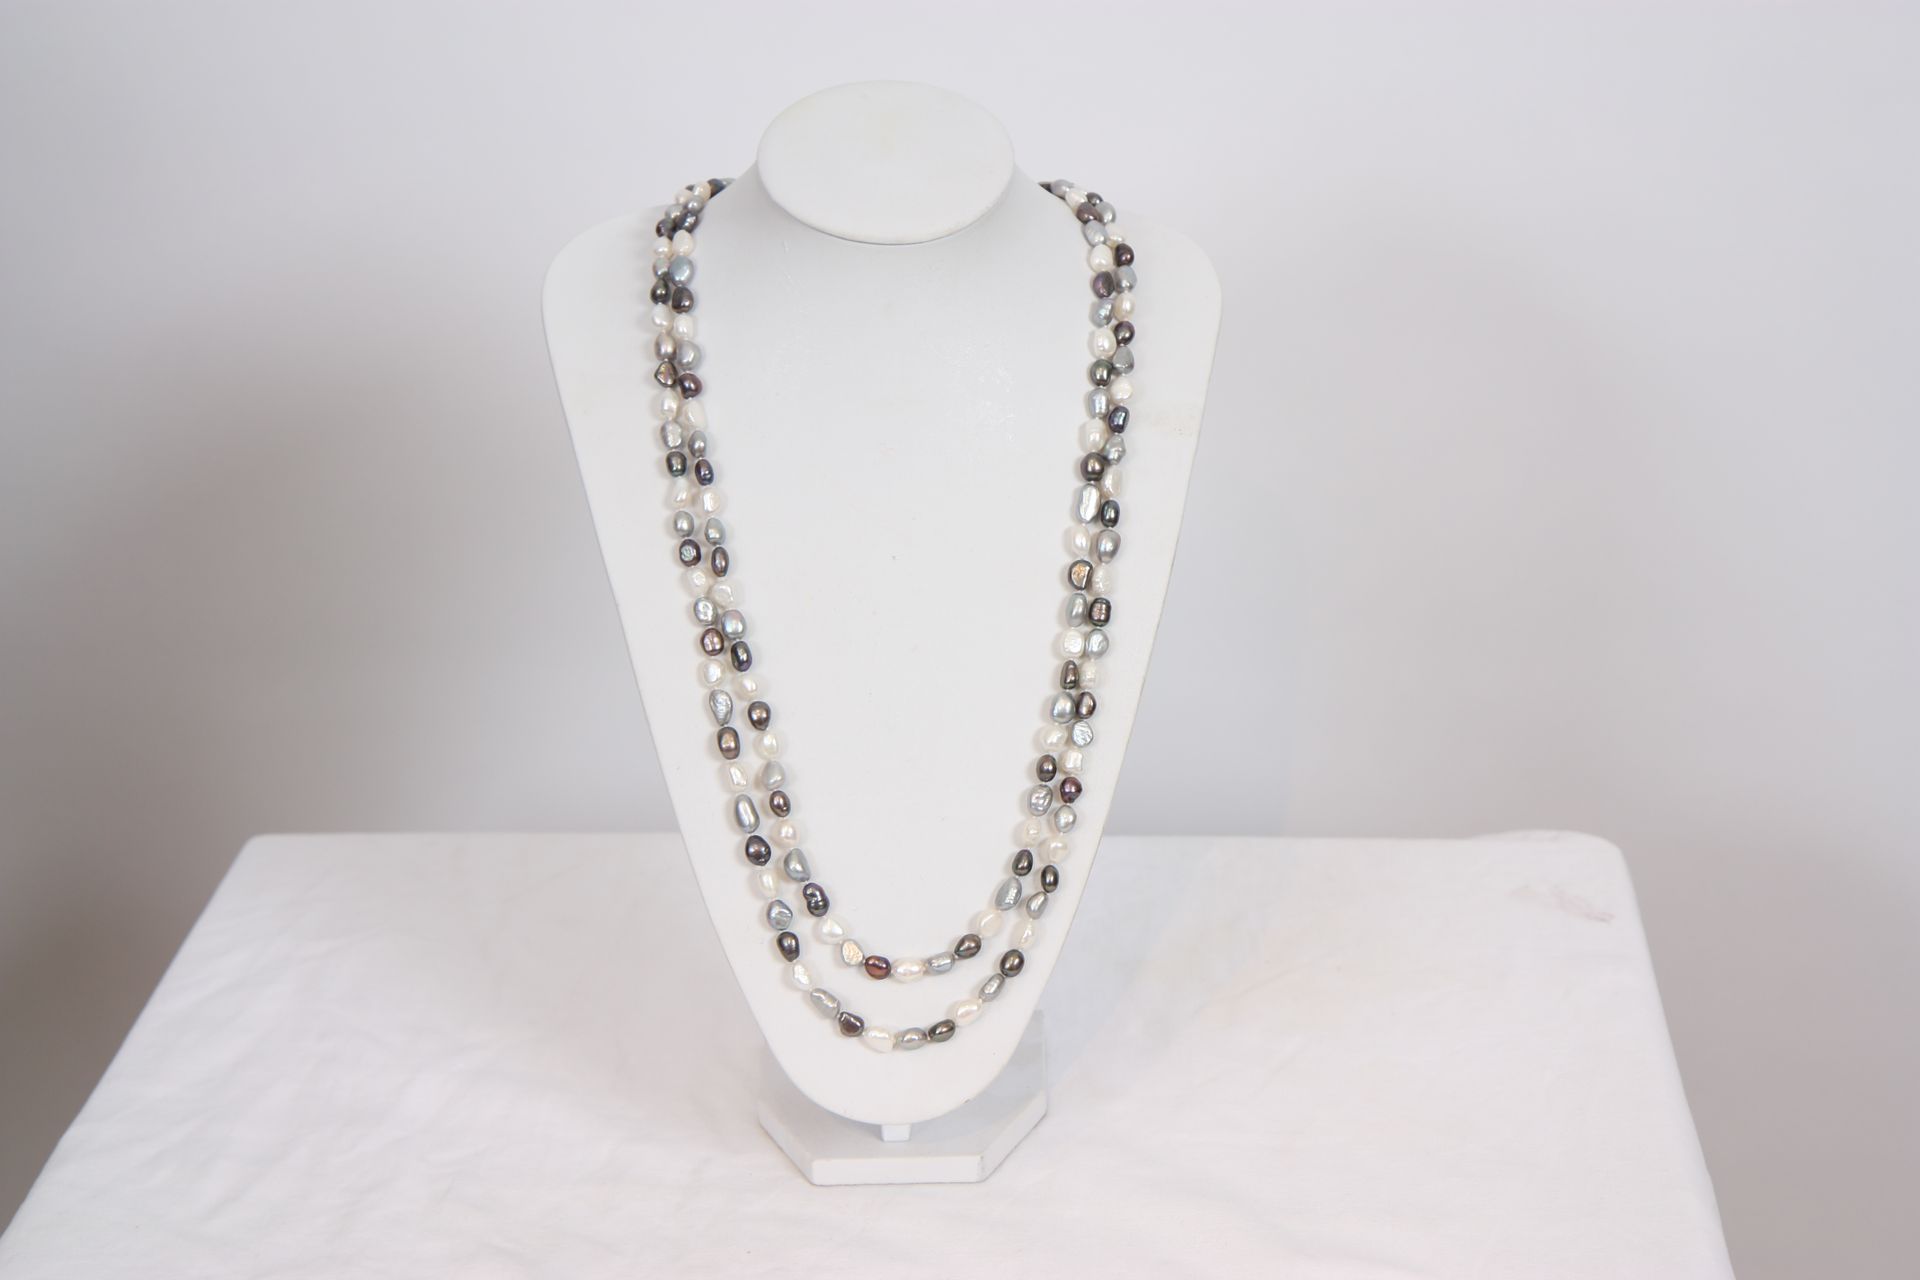 Null COLLIER DE PERLES BAROQUES OVALES

L perles : 1 cm env.

L : 180 cm